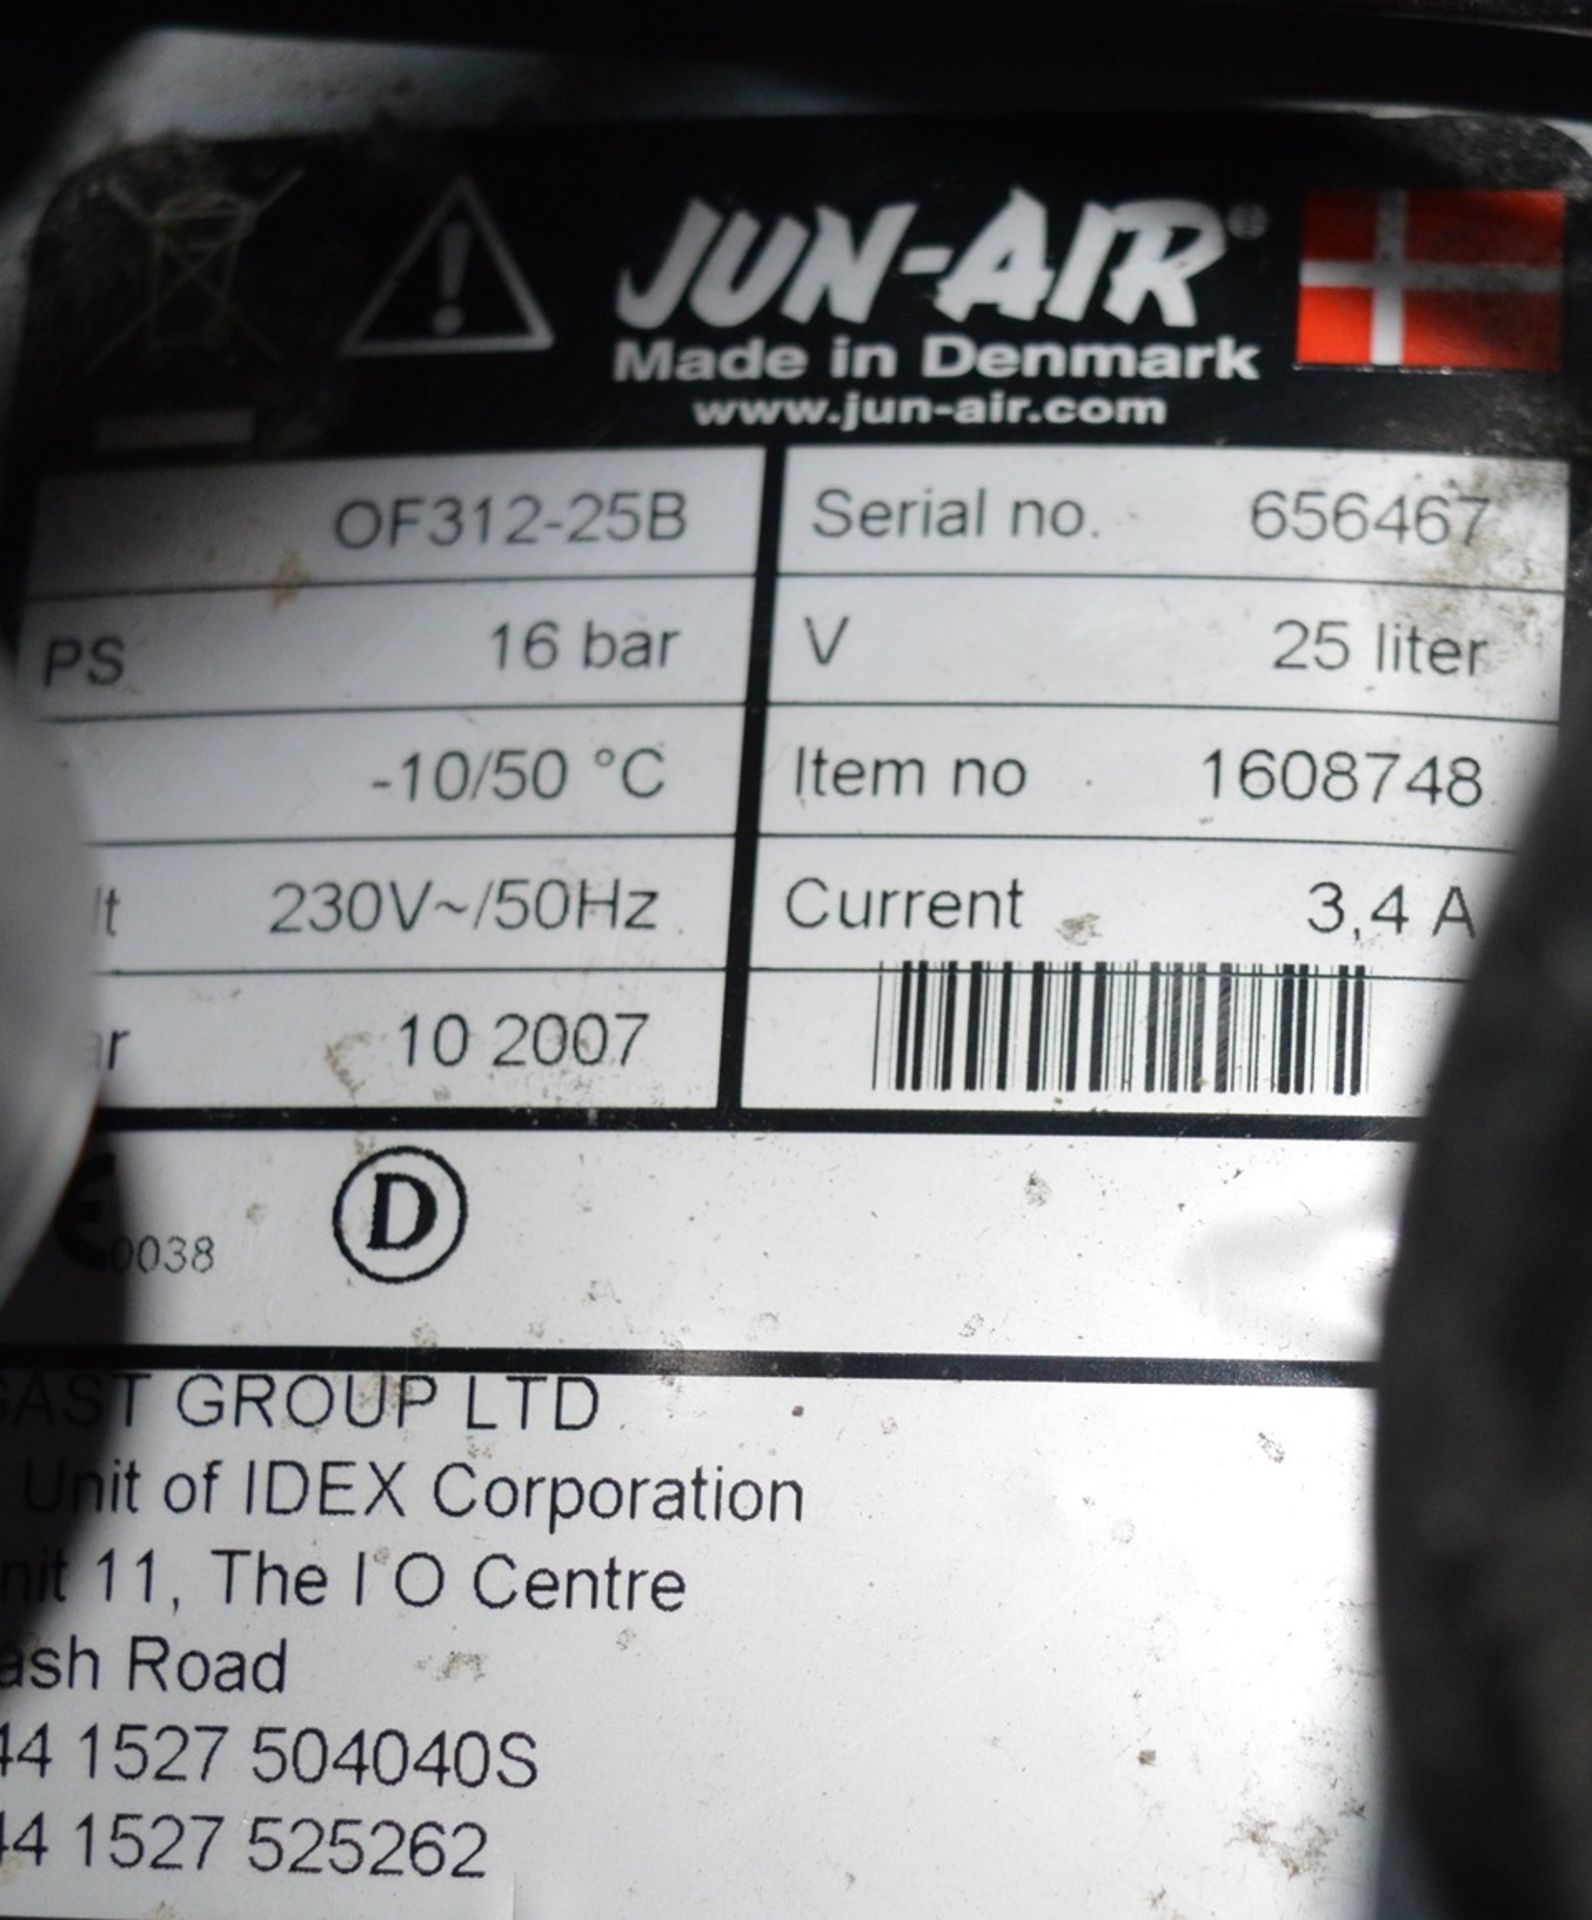 1 x Jun-Air OF302-25B Oil-free 25l Air Compressor - Good Working Order - Quiet Operation - Oil - Image 4 of 5